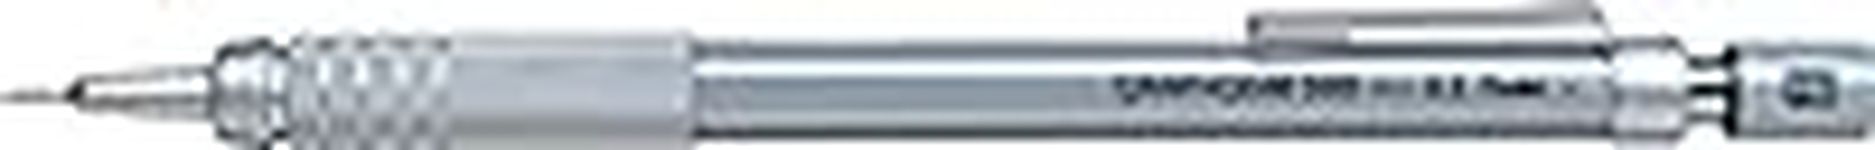 Pentel Graphgear 500 Mechanical Pencil, 0.5mm Lead, Grade HB, 1 x Graphgear Pencil, Silver, (PG515-A)